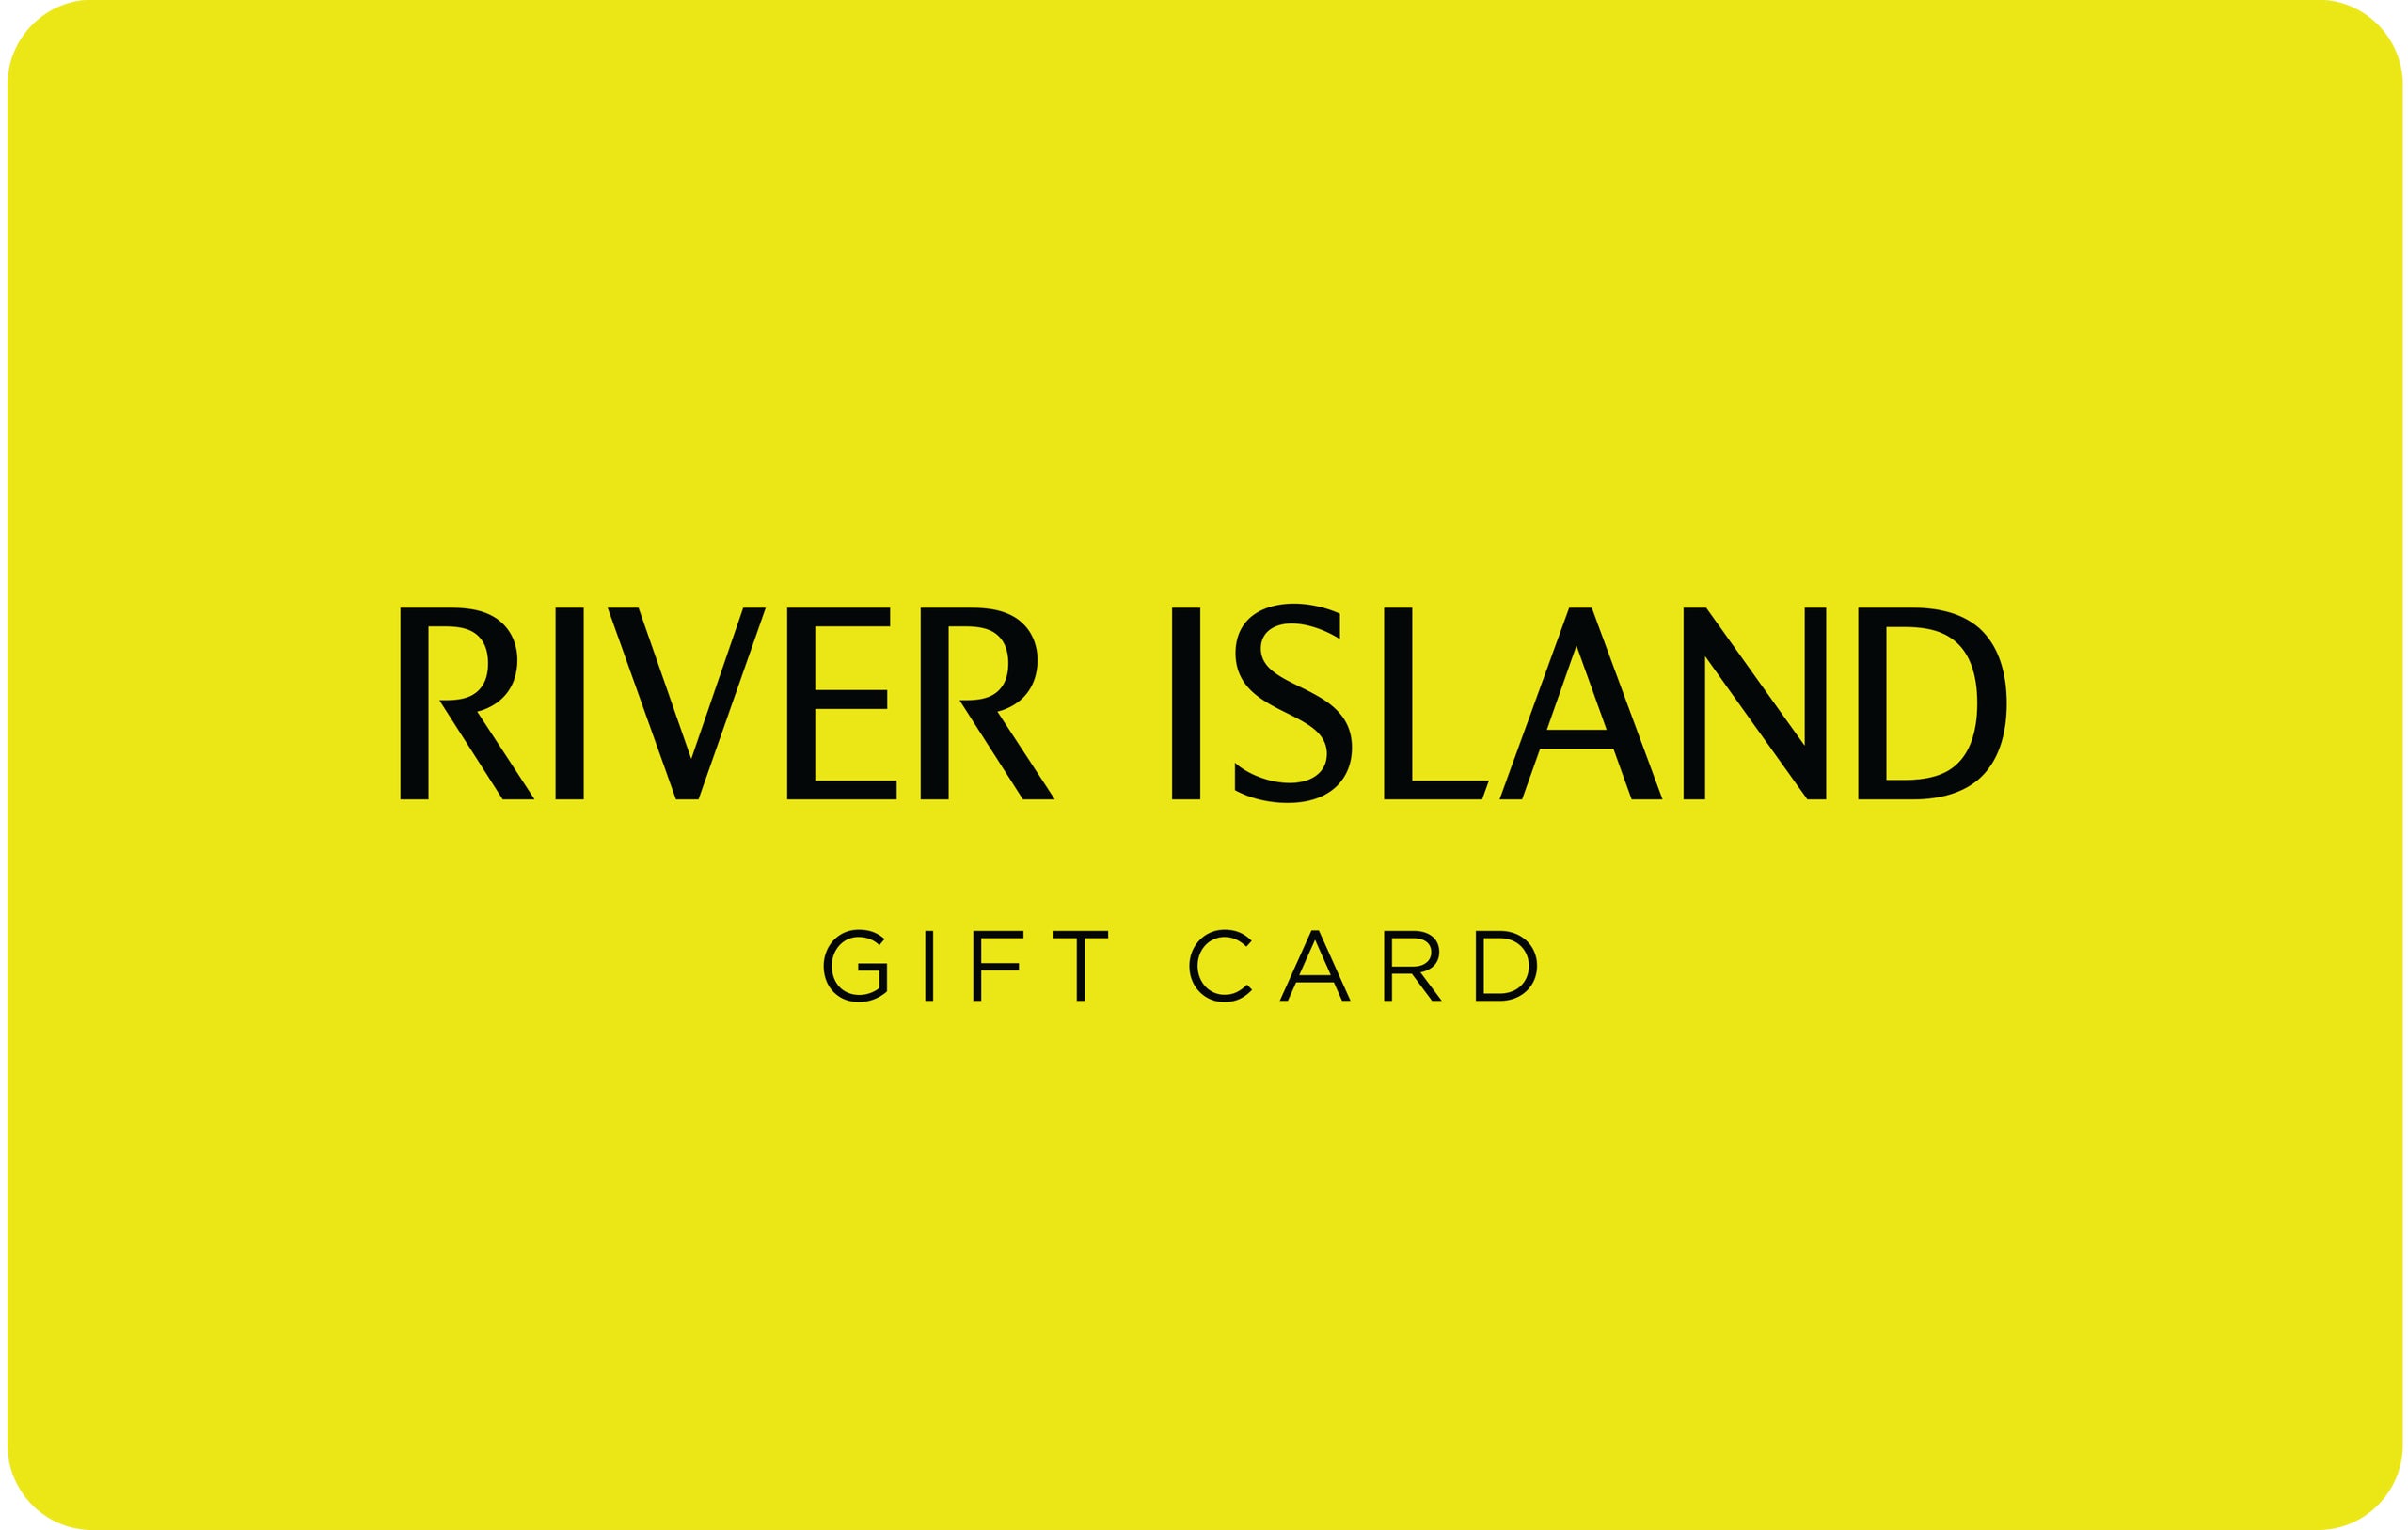 River Island eGift Card gift card image